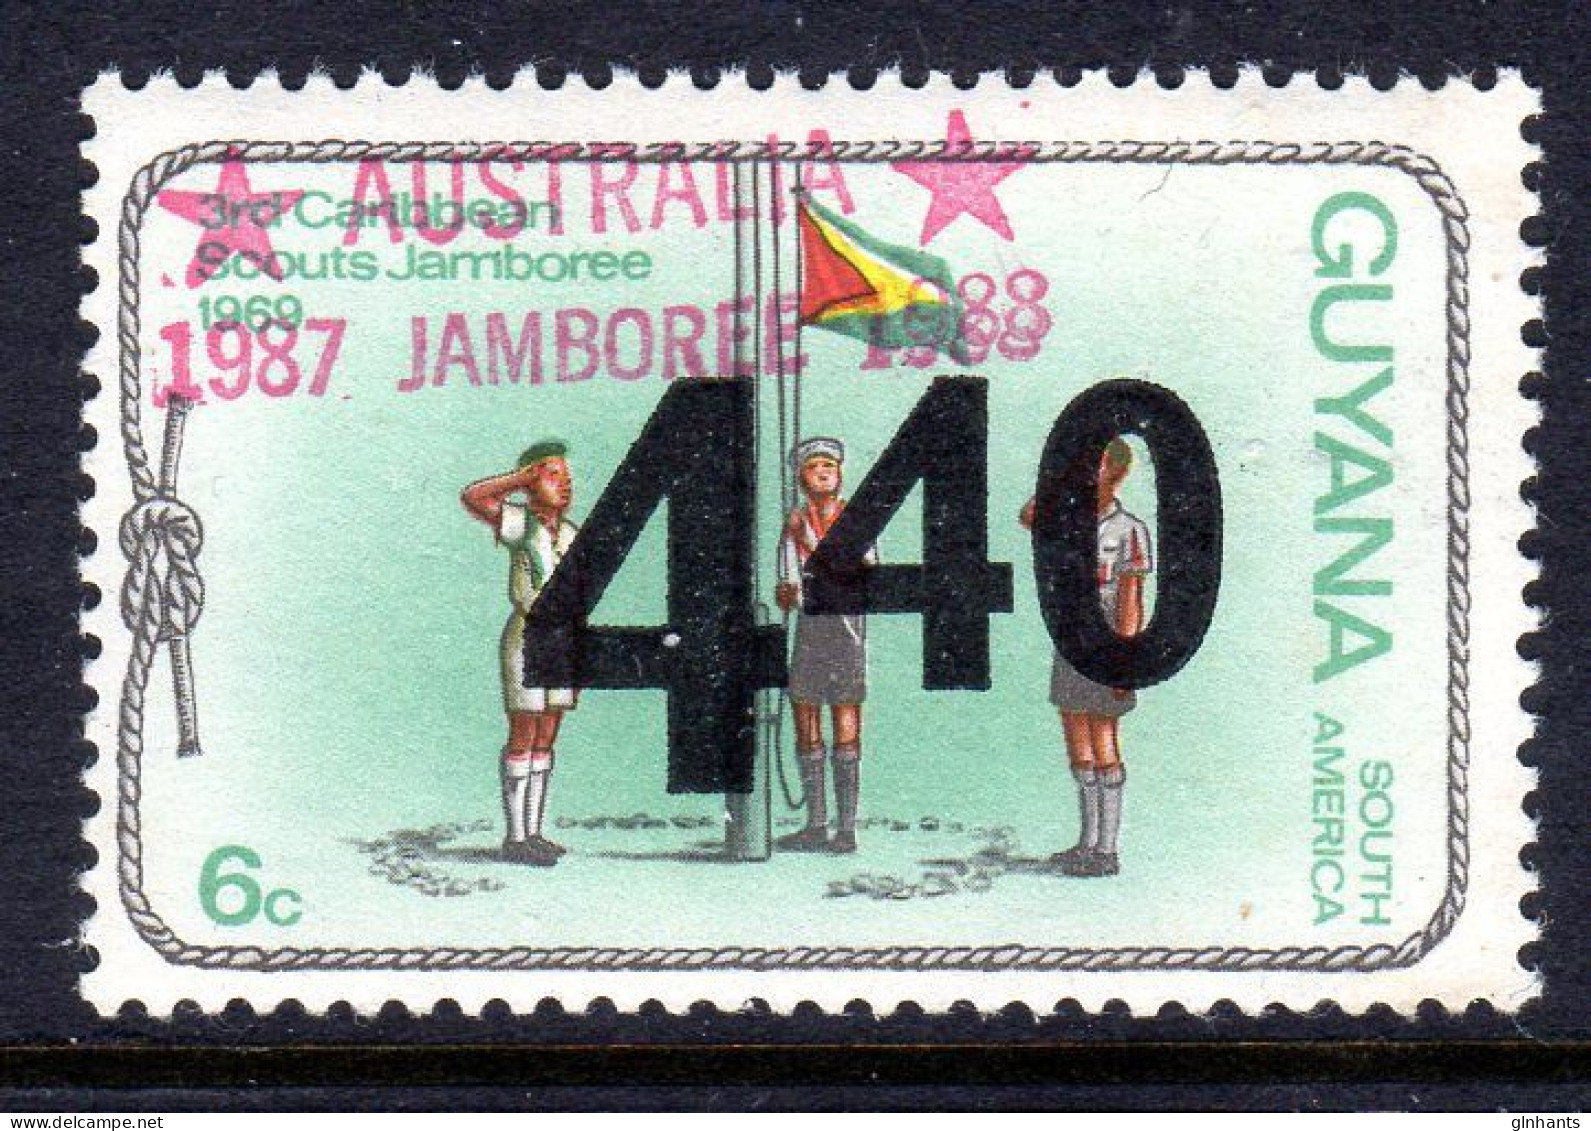 GUYANA - 1988 440 ON 6c AUSTRALIA JAMBOREE OVERPRINT FINE MNH ** SG 2266 REF B - Guyane (1966-...)